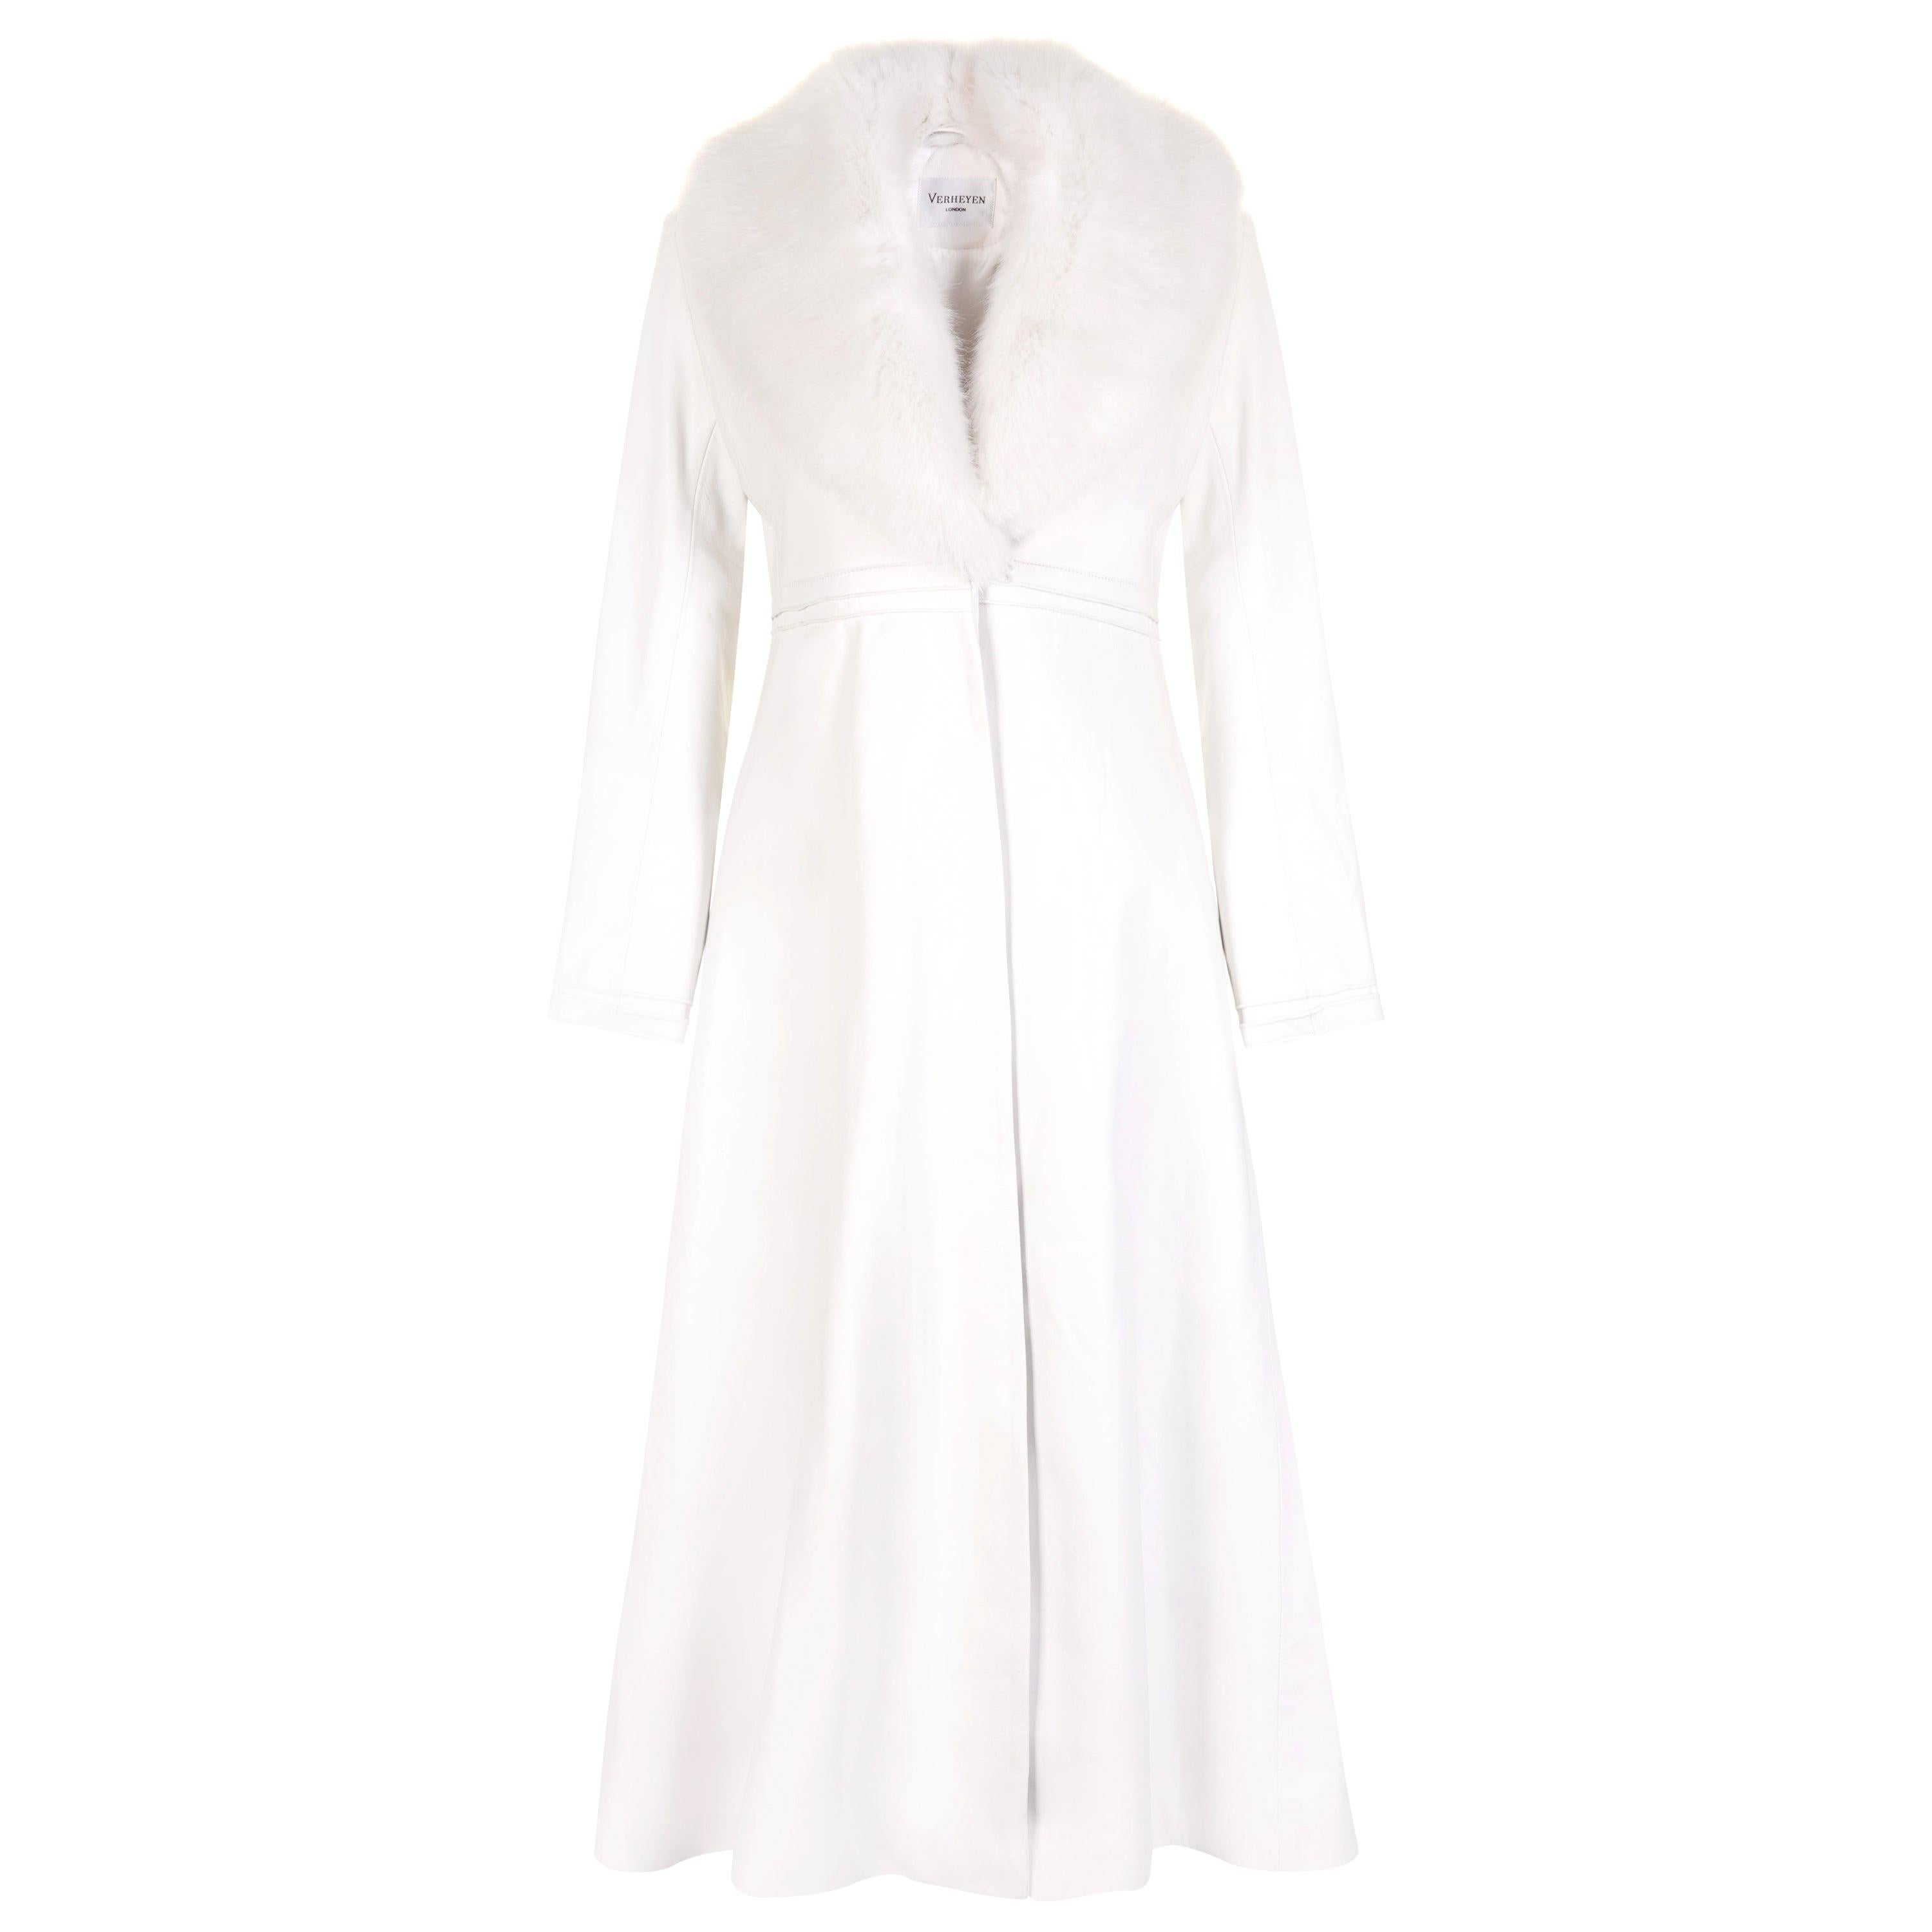 Verheyen London Edward Leather Coat in White with Faux Fur - uk size 6 